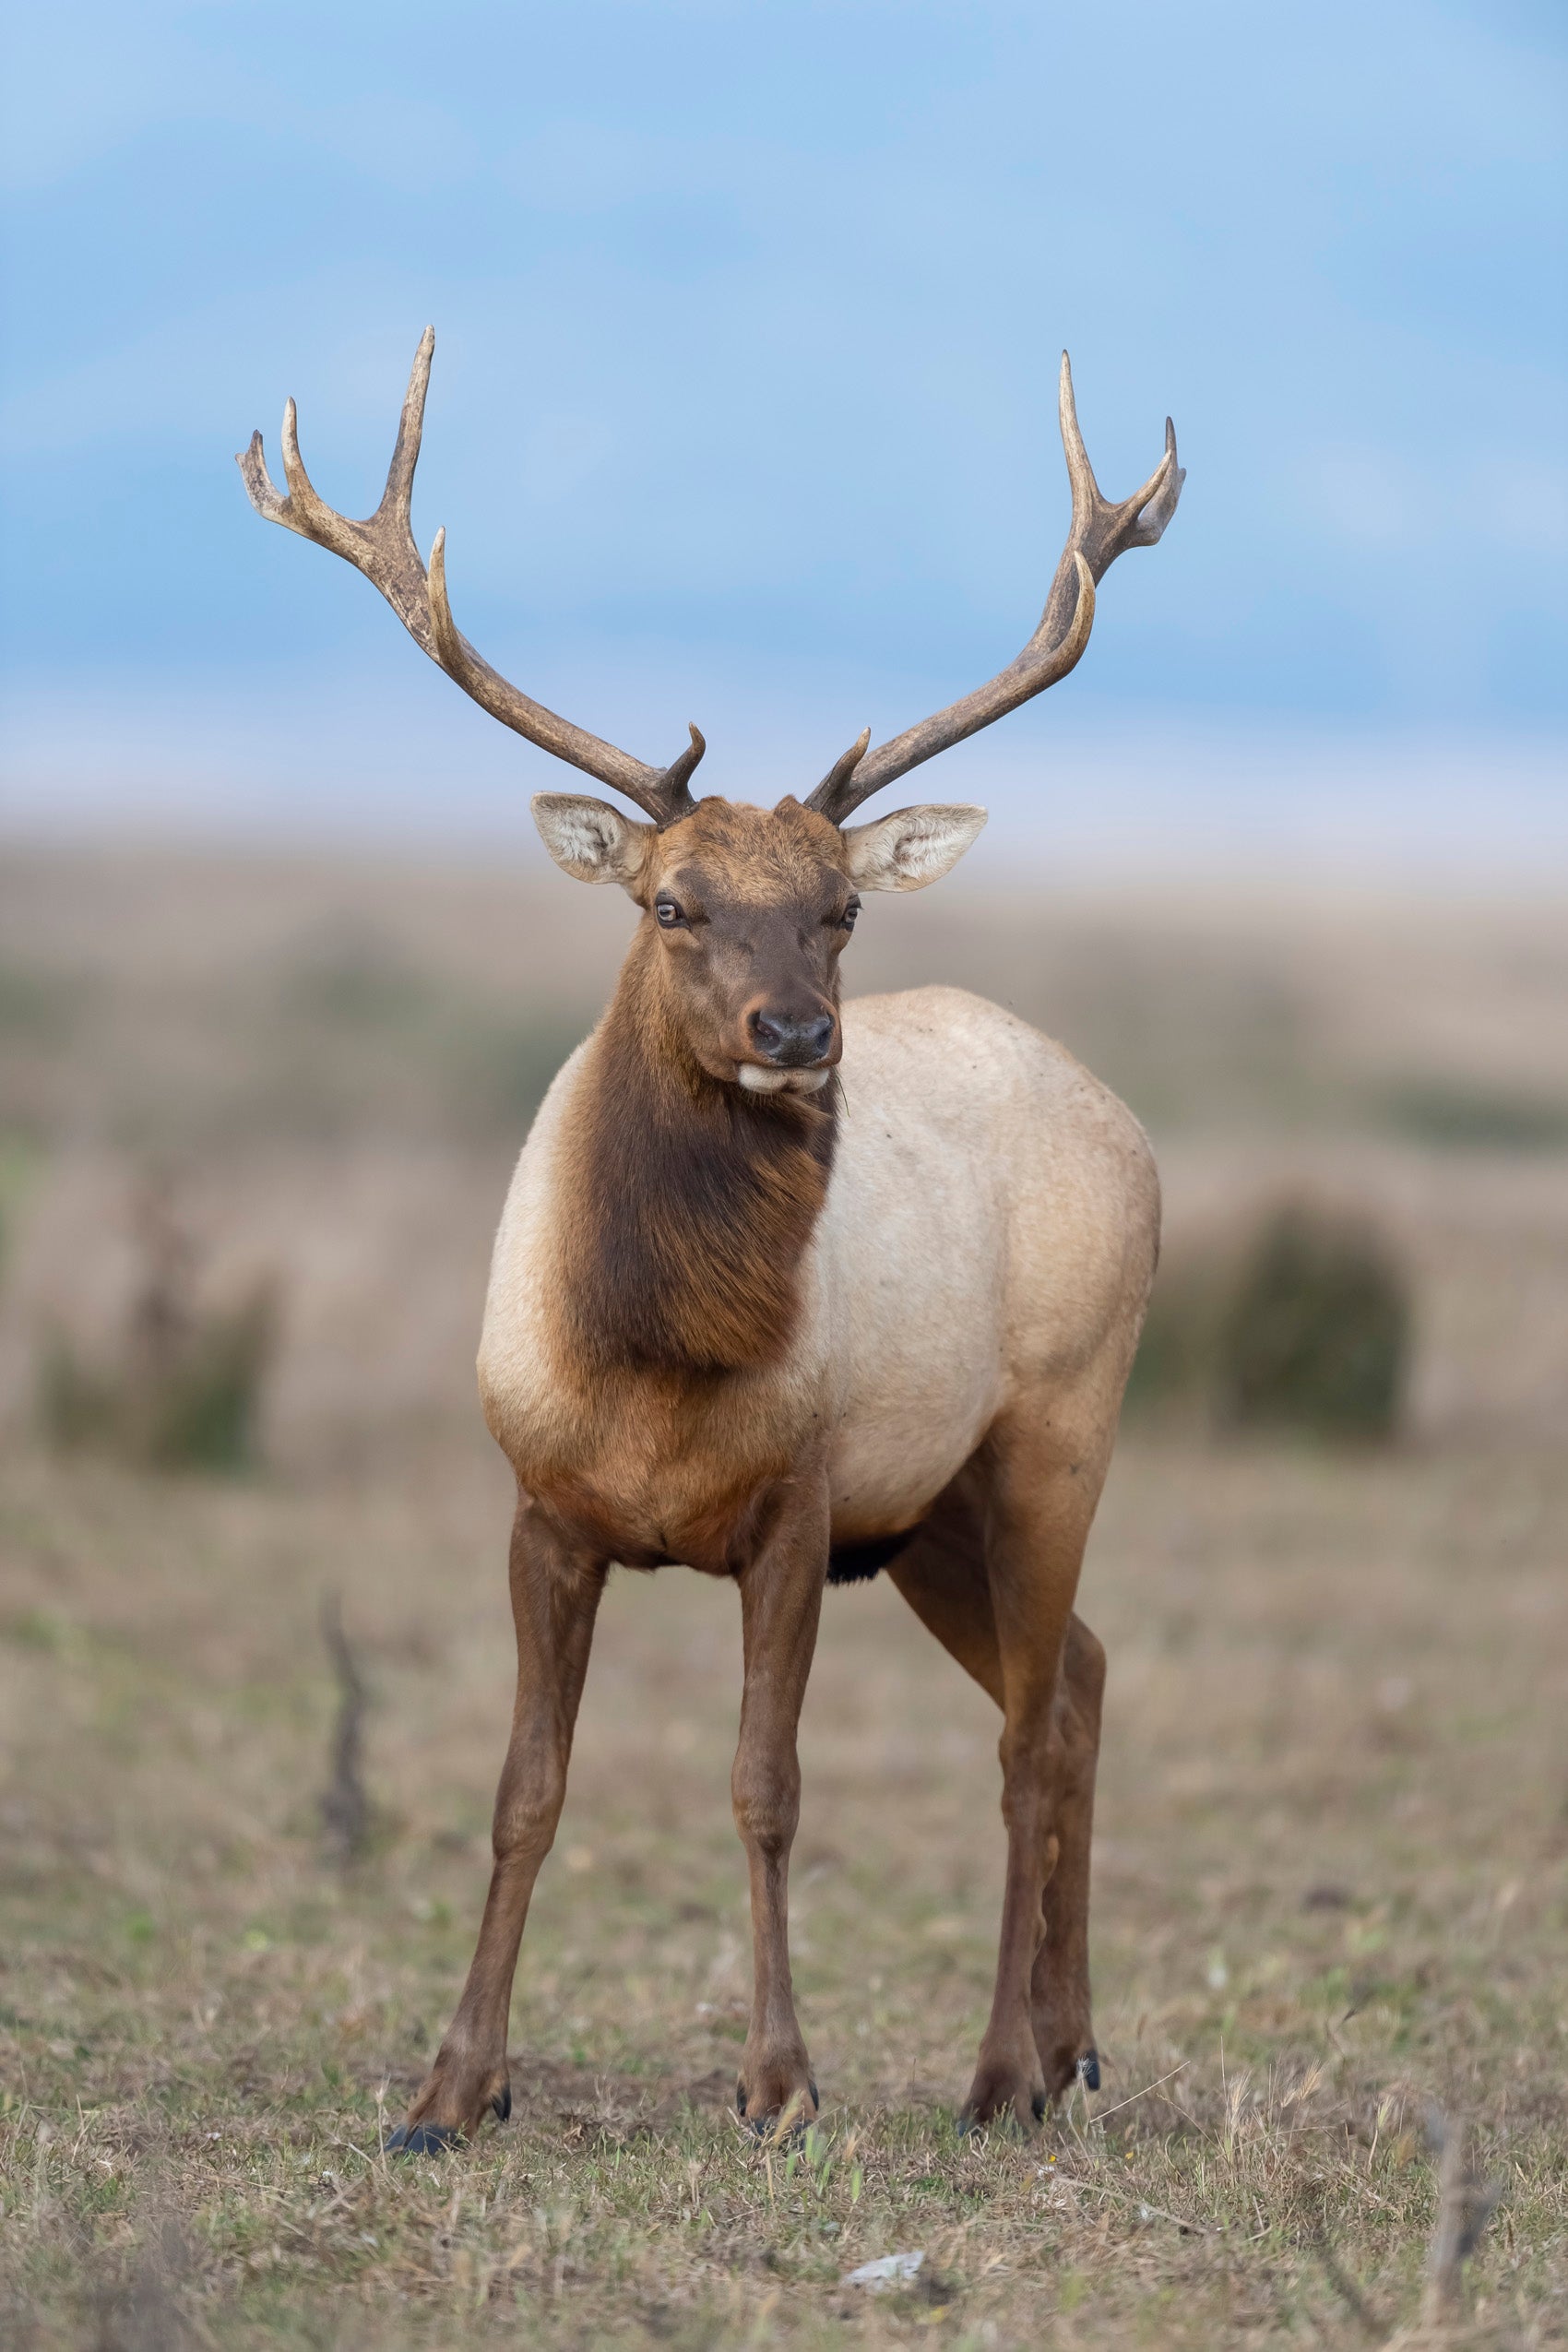 An elk on a grassy land